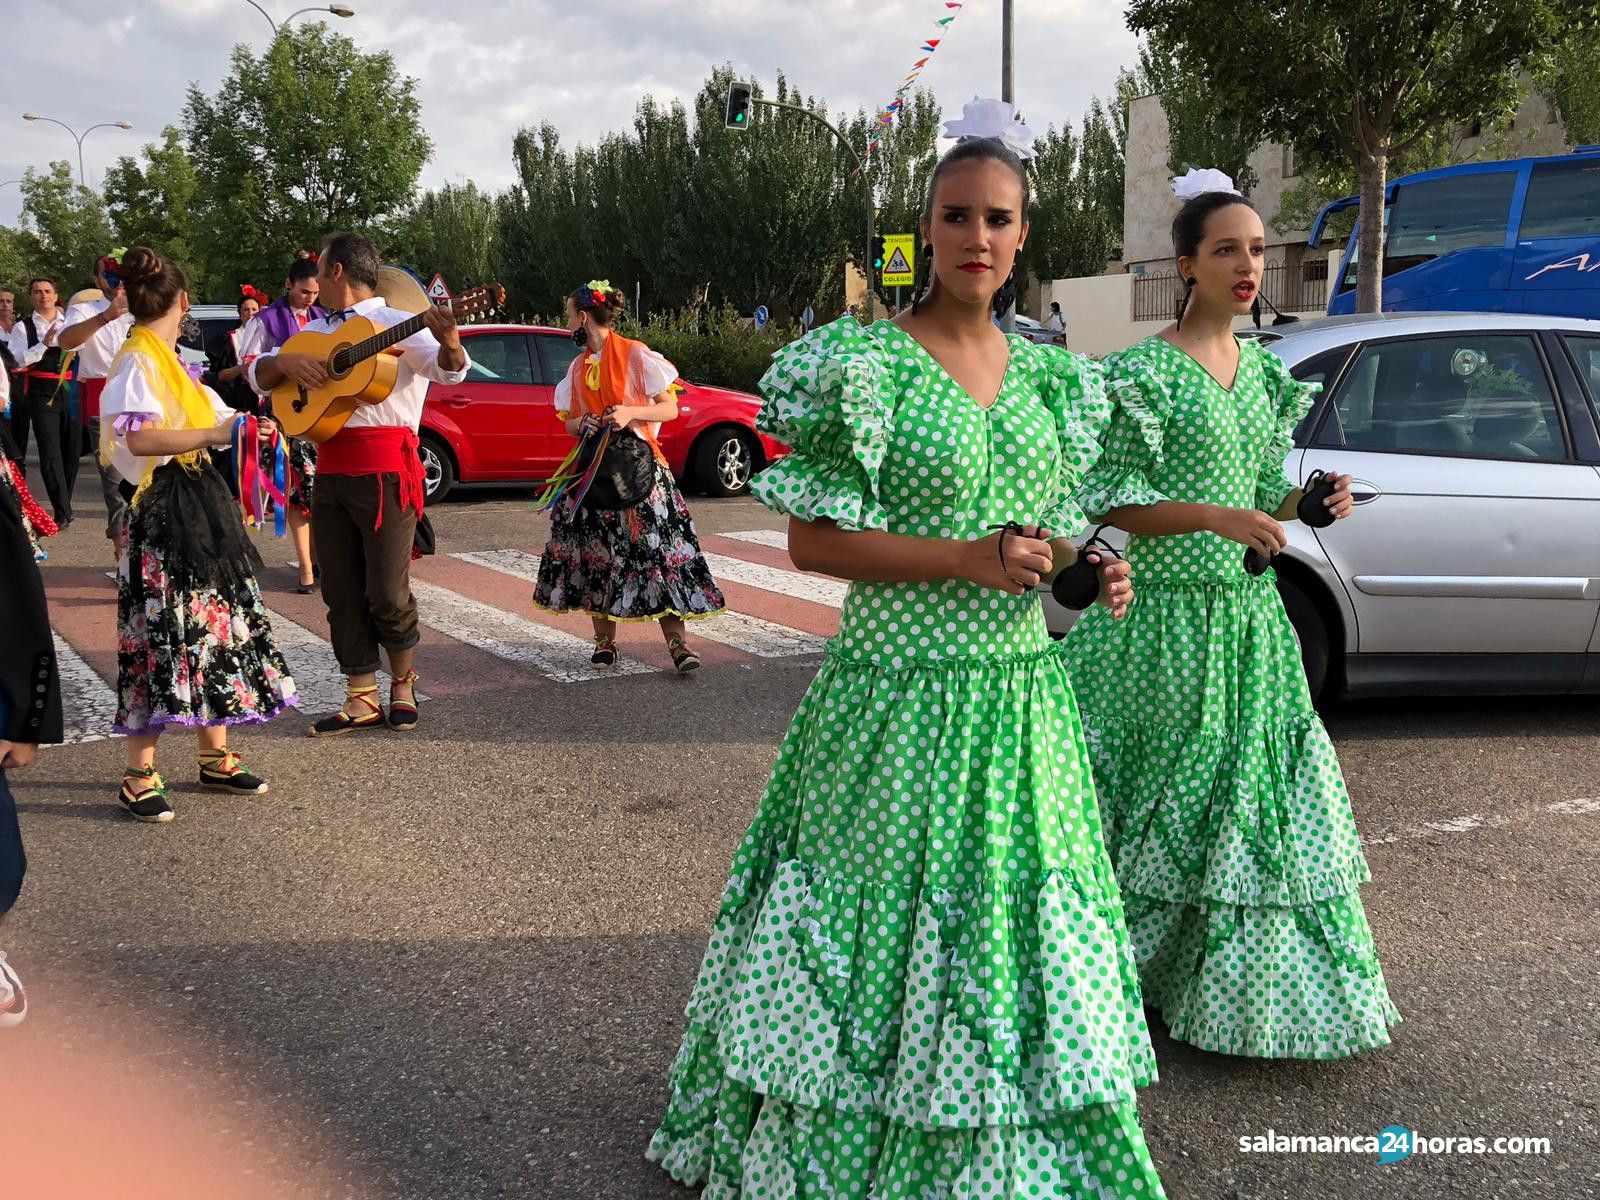  Festival Folclórico Villamayor 2019 (27) 